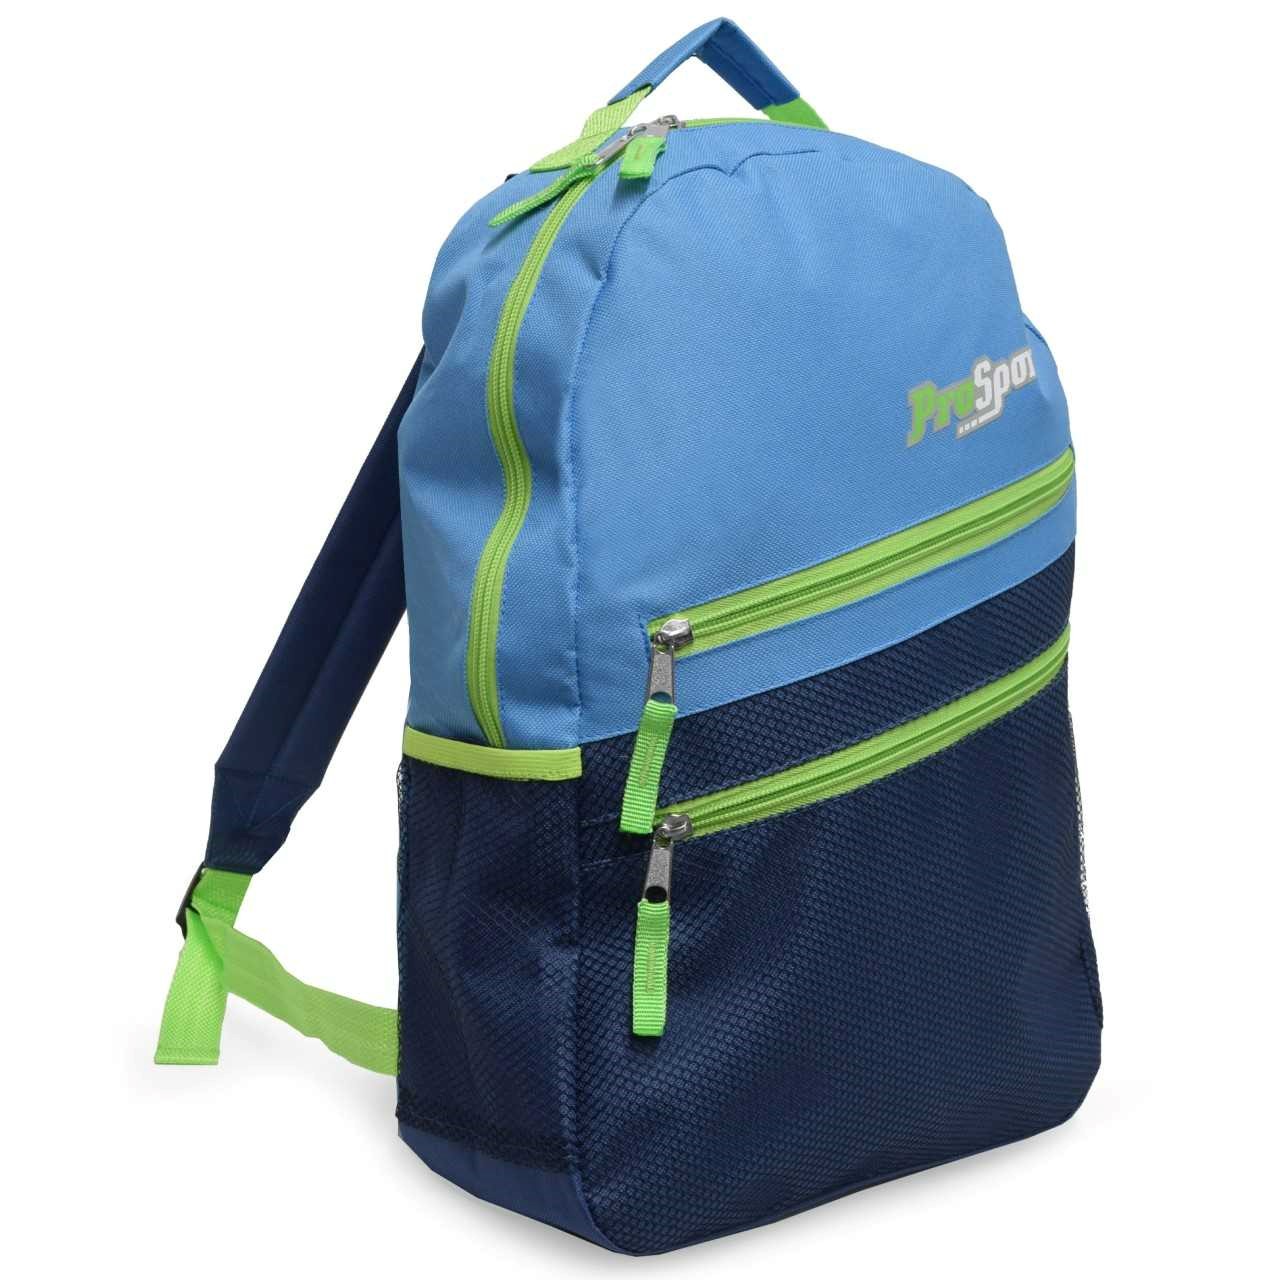 46422 - ProSport Multi-Pocket Front Zippers Backpack with Beverage Pocket USA